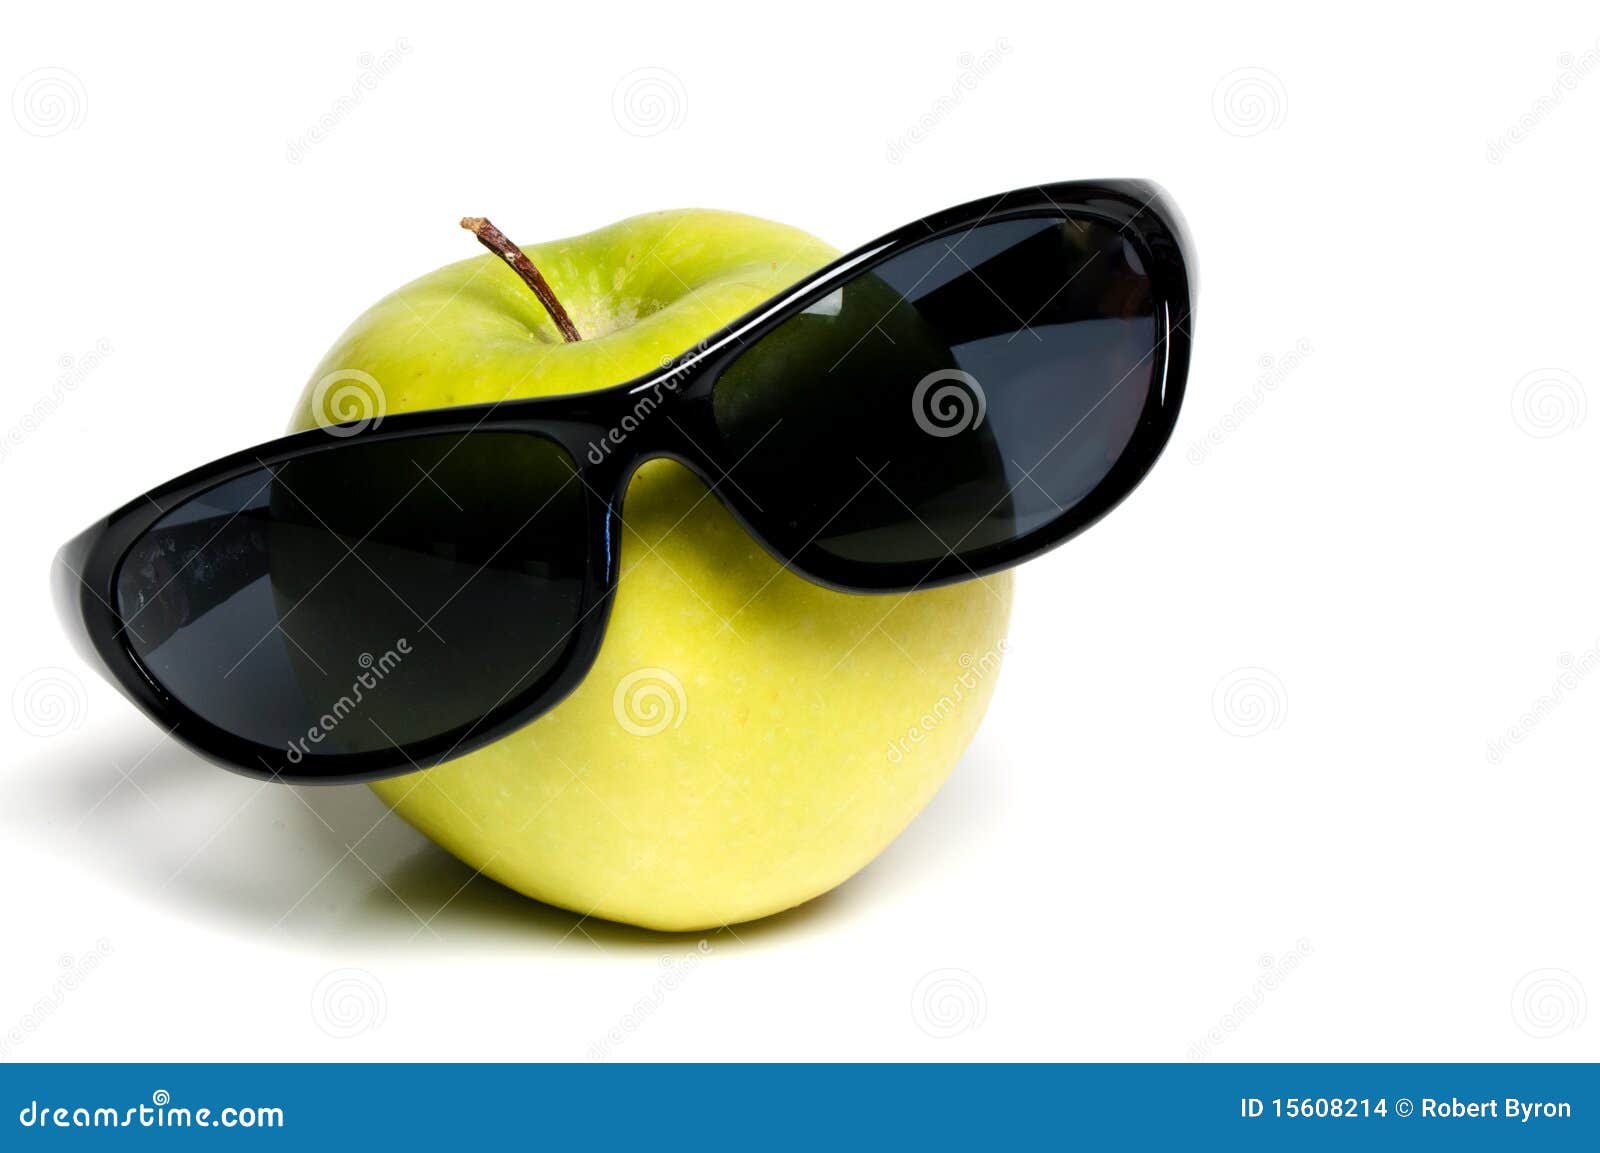 Doelwit Bedrog rol Granny Smith Apple with Sunglasses Stock Photo - Image of eyewear,  sunglasses: 15608214